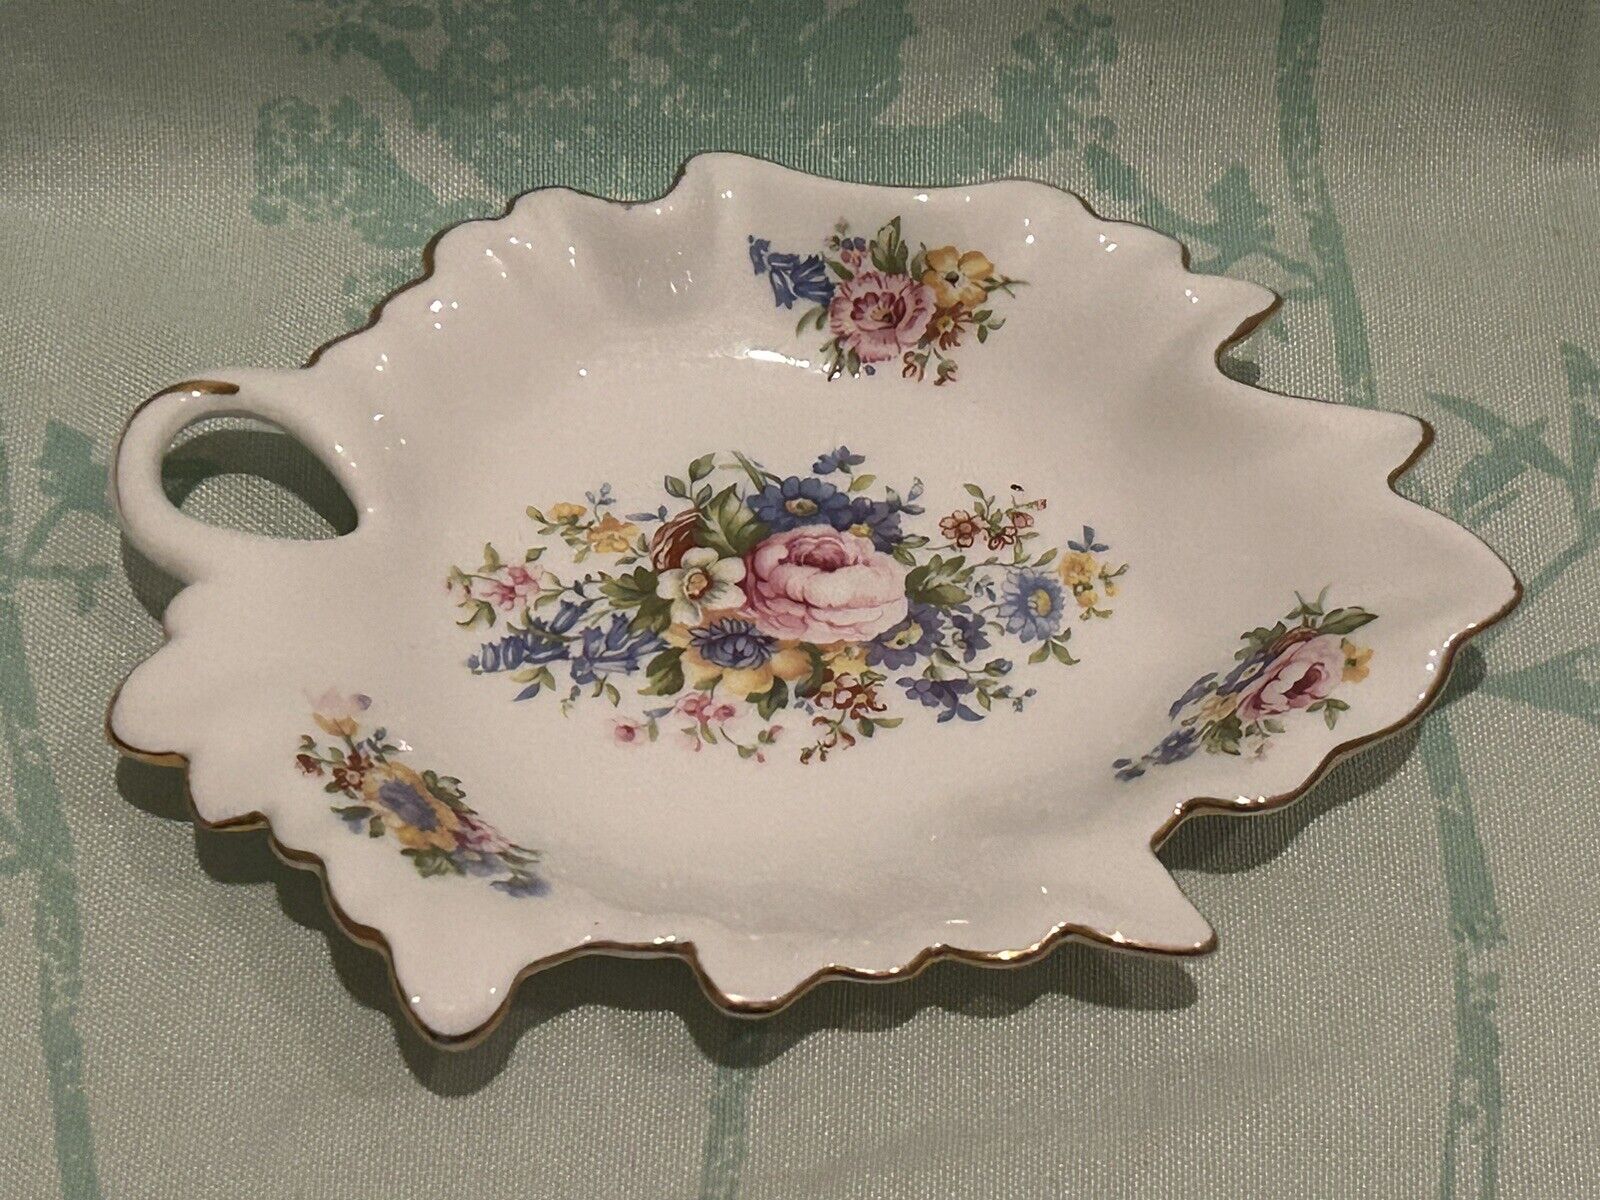 Lovely Vintage Floral Dessert Plate, Candy Dish